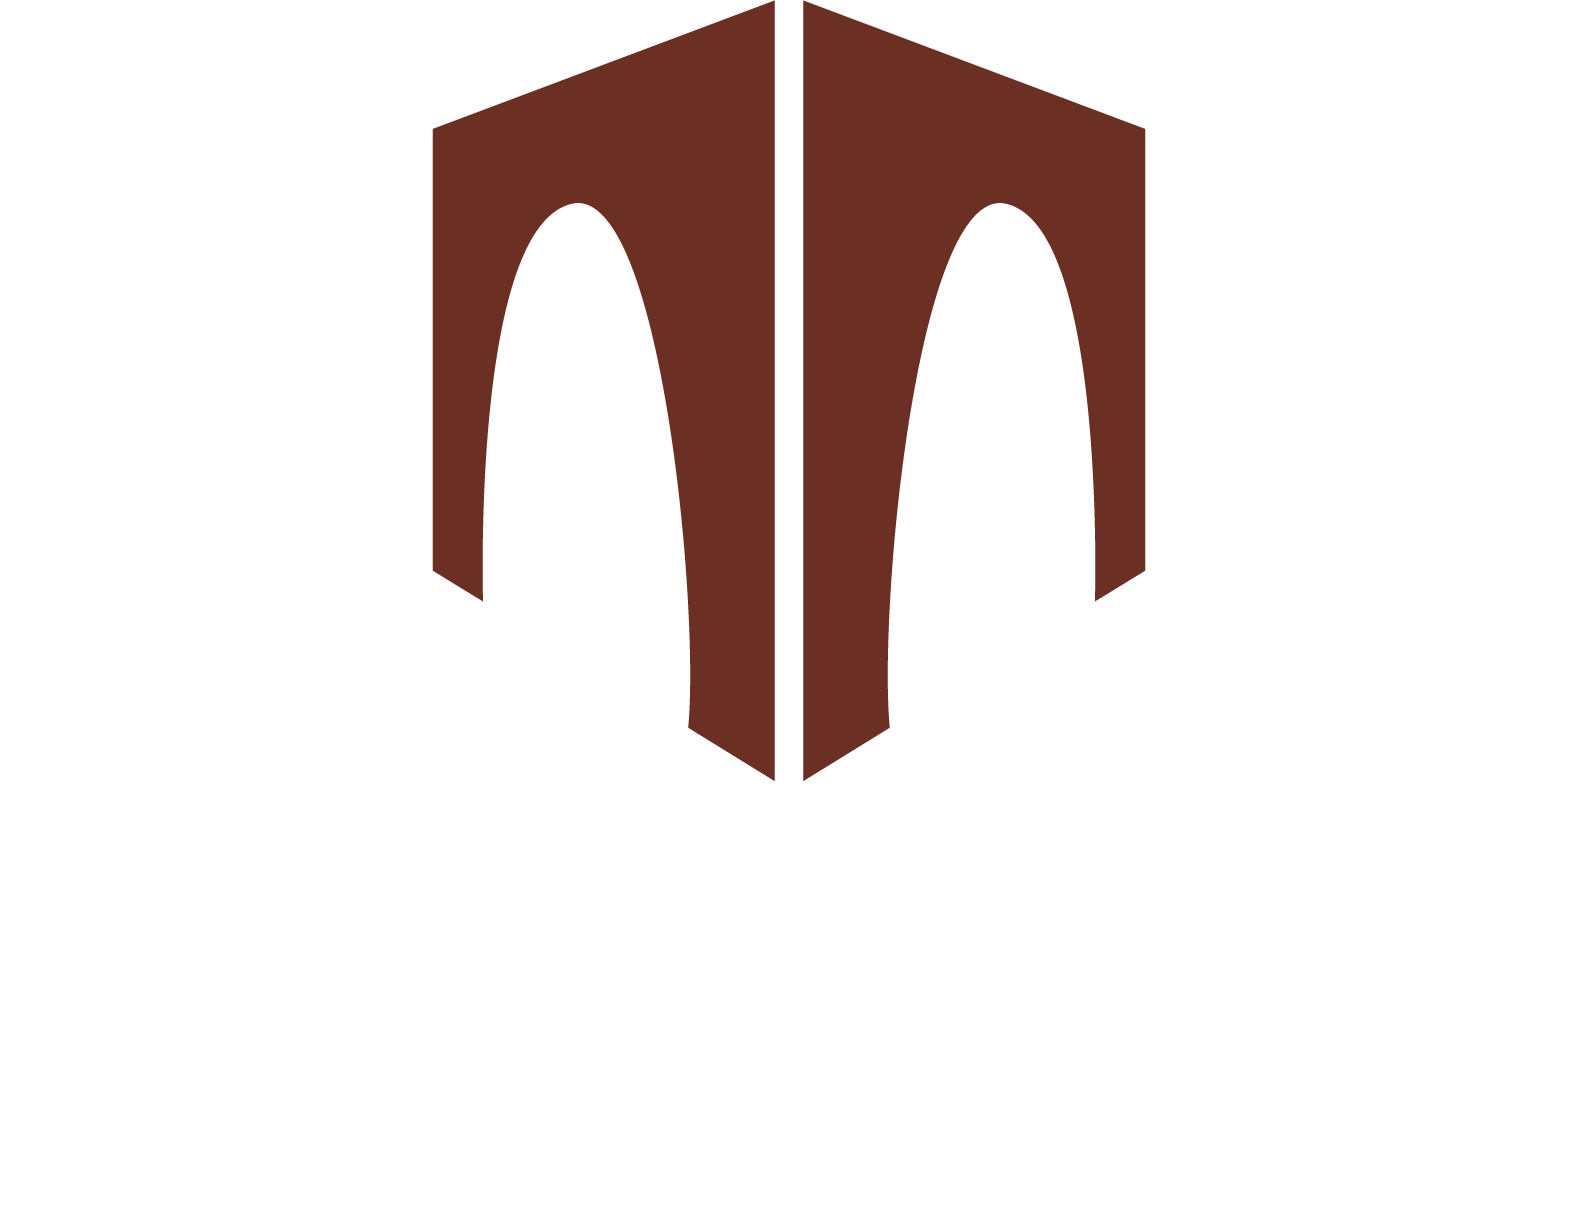 The Wood Light